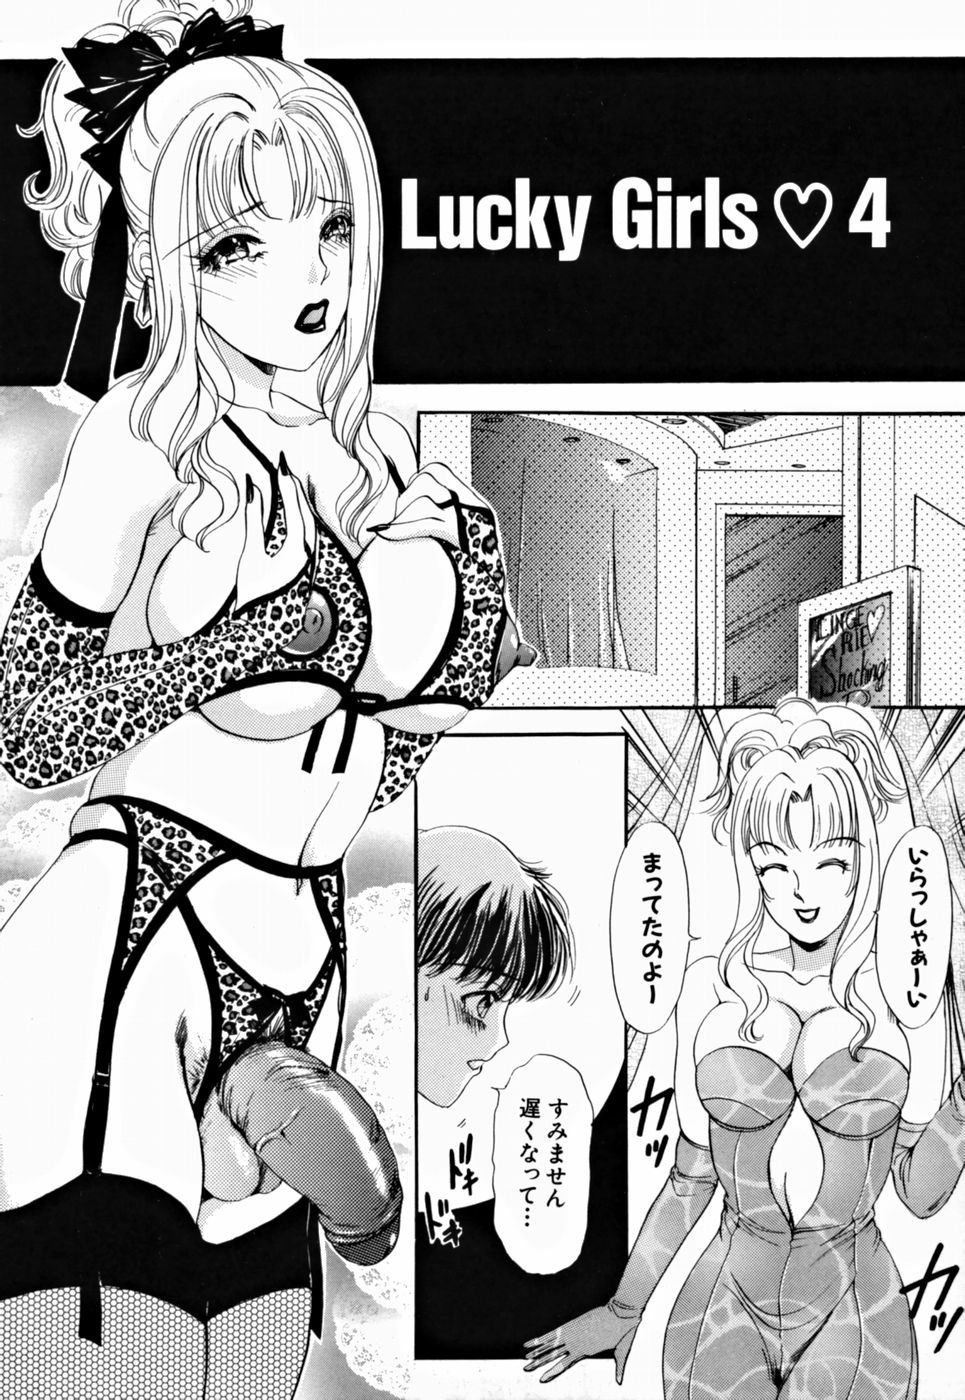 [The Amanoja9] T.S. I LOVE YOU... 2 - Lucky Girls Tsuiteru Onna 74